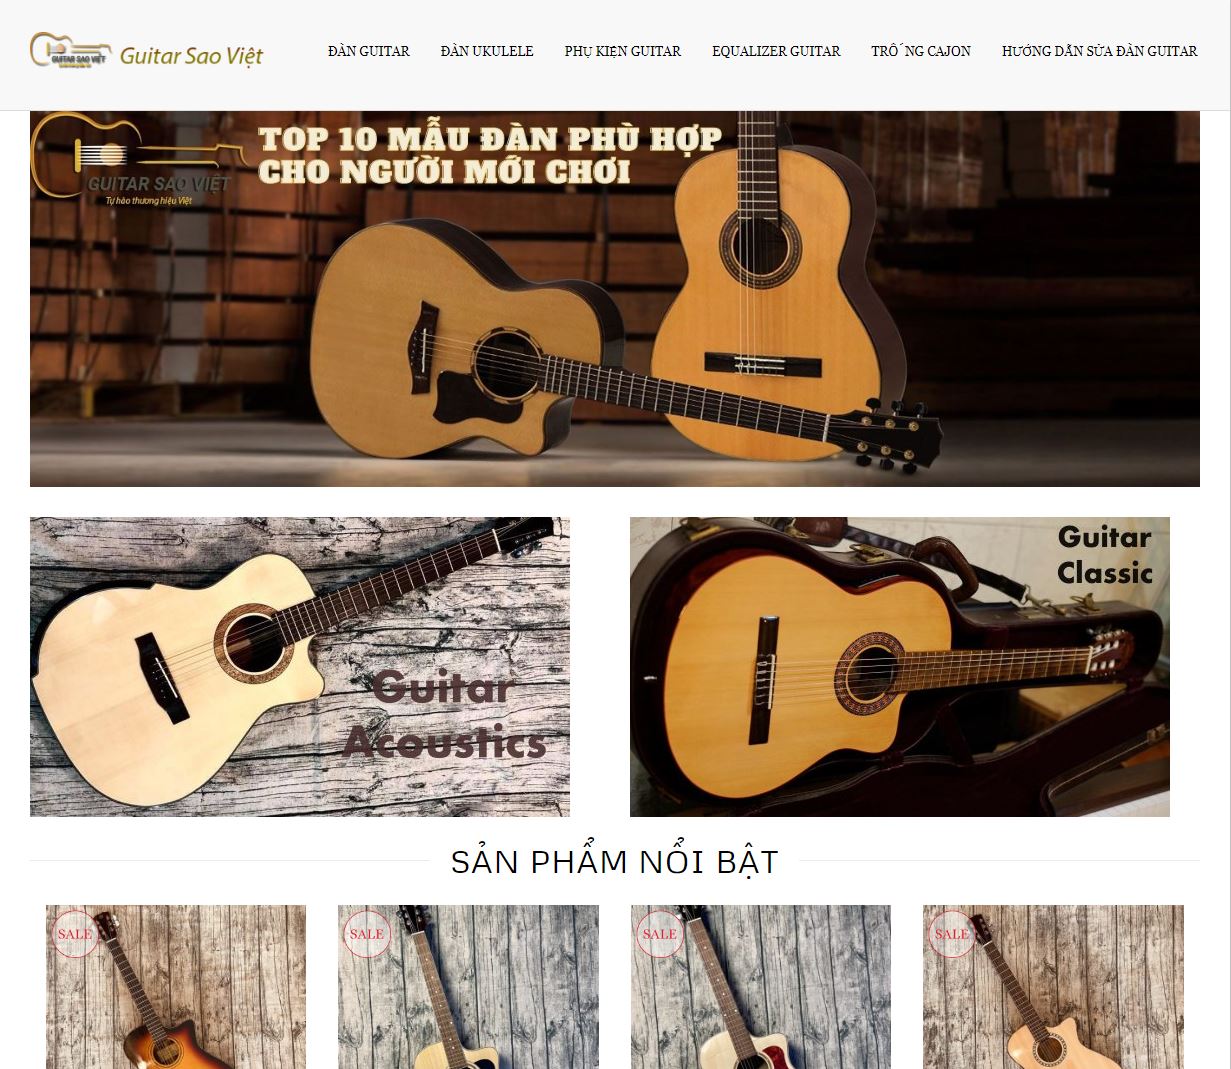 guitarsaoviet.com